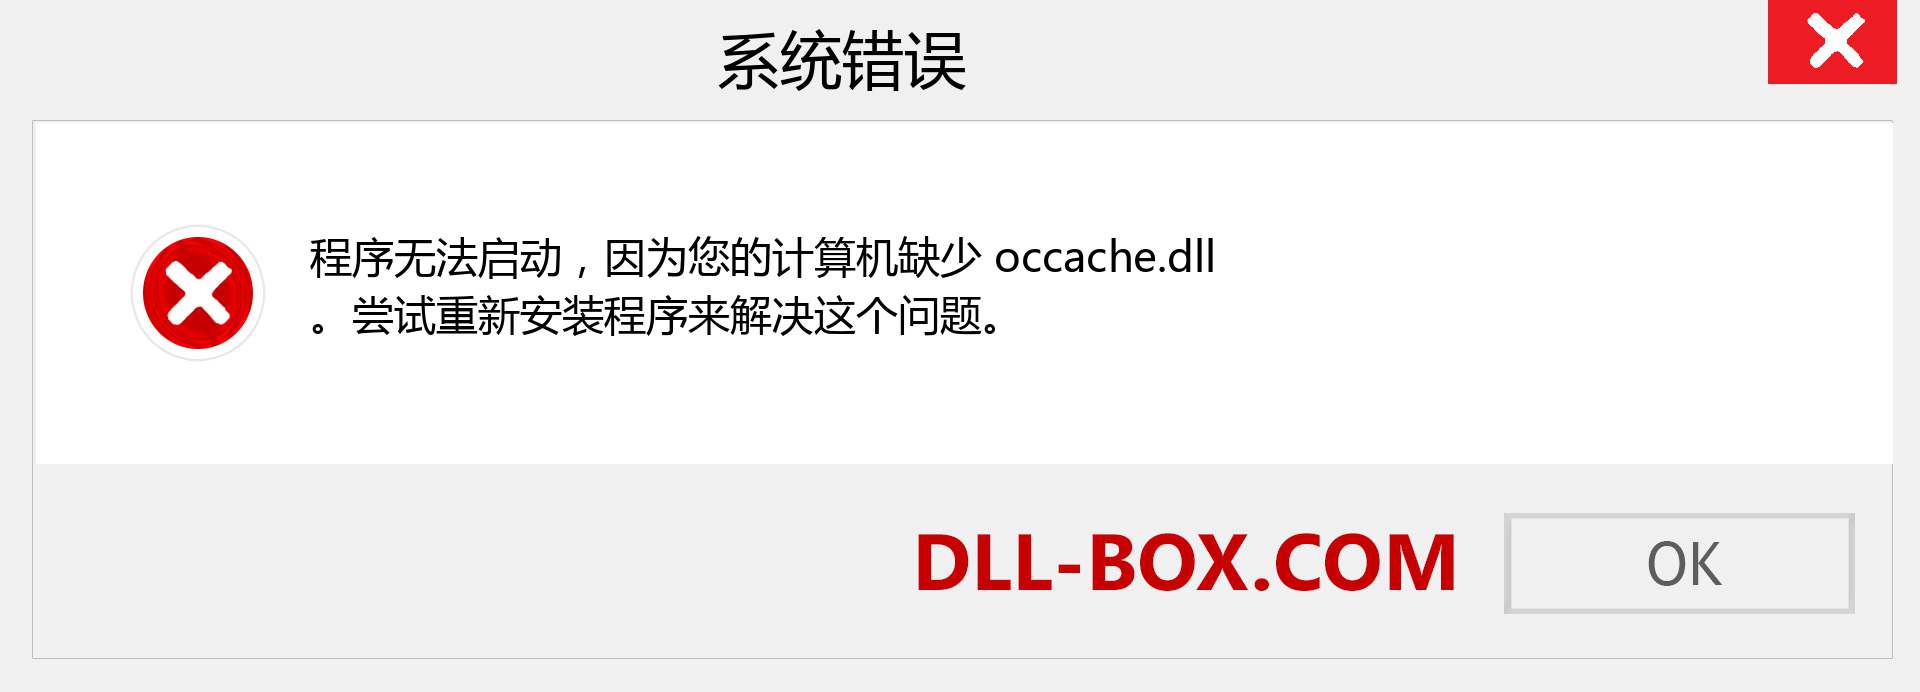 occache.dll 文件丢失？。 适用于 Windows 7、8、10 的下载 - 修复 Windows、照片、图像上的 occache dll 丢失错误